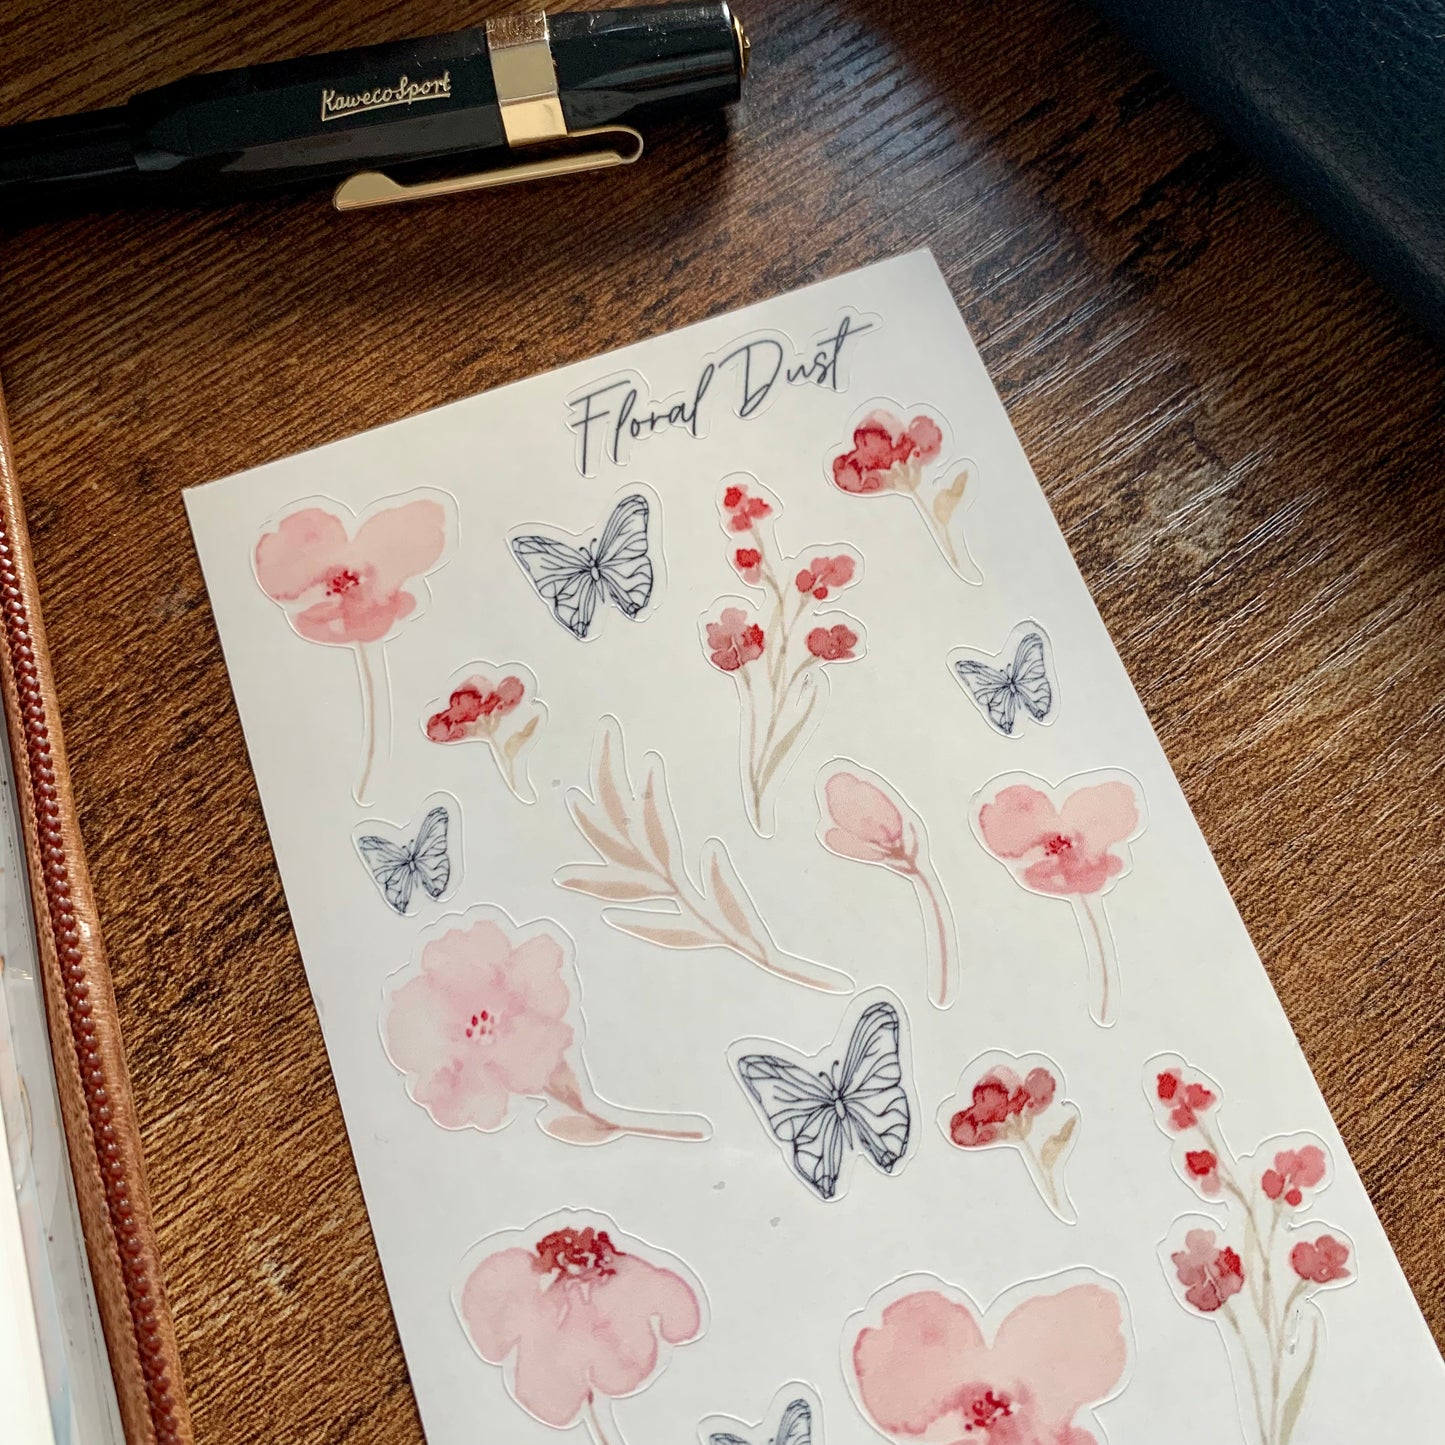 Pretty Transparent Floral & Butterflies Sticker Sheet - Floral Dust